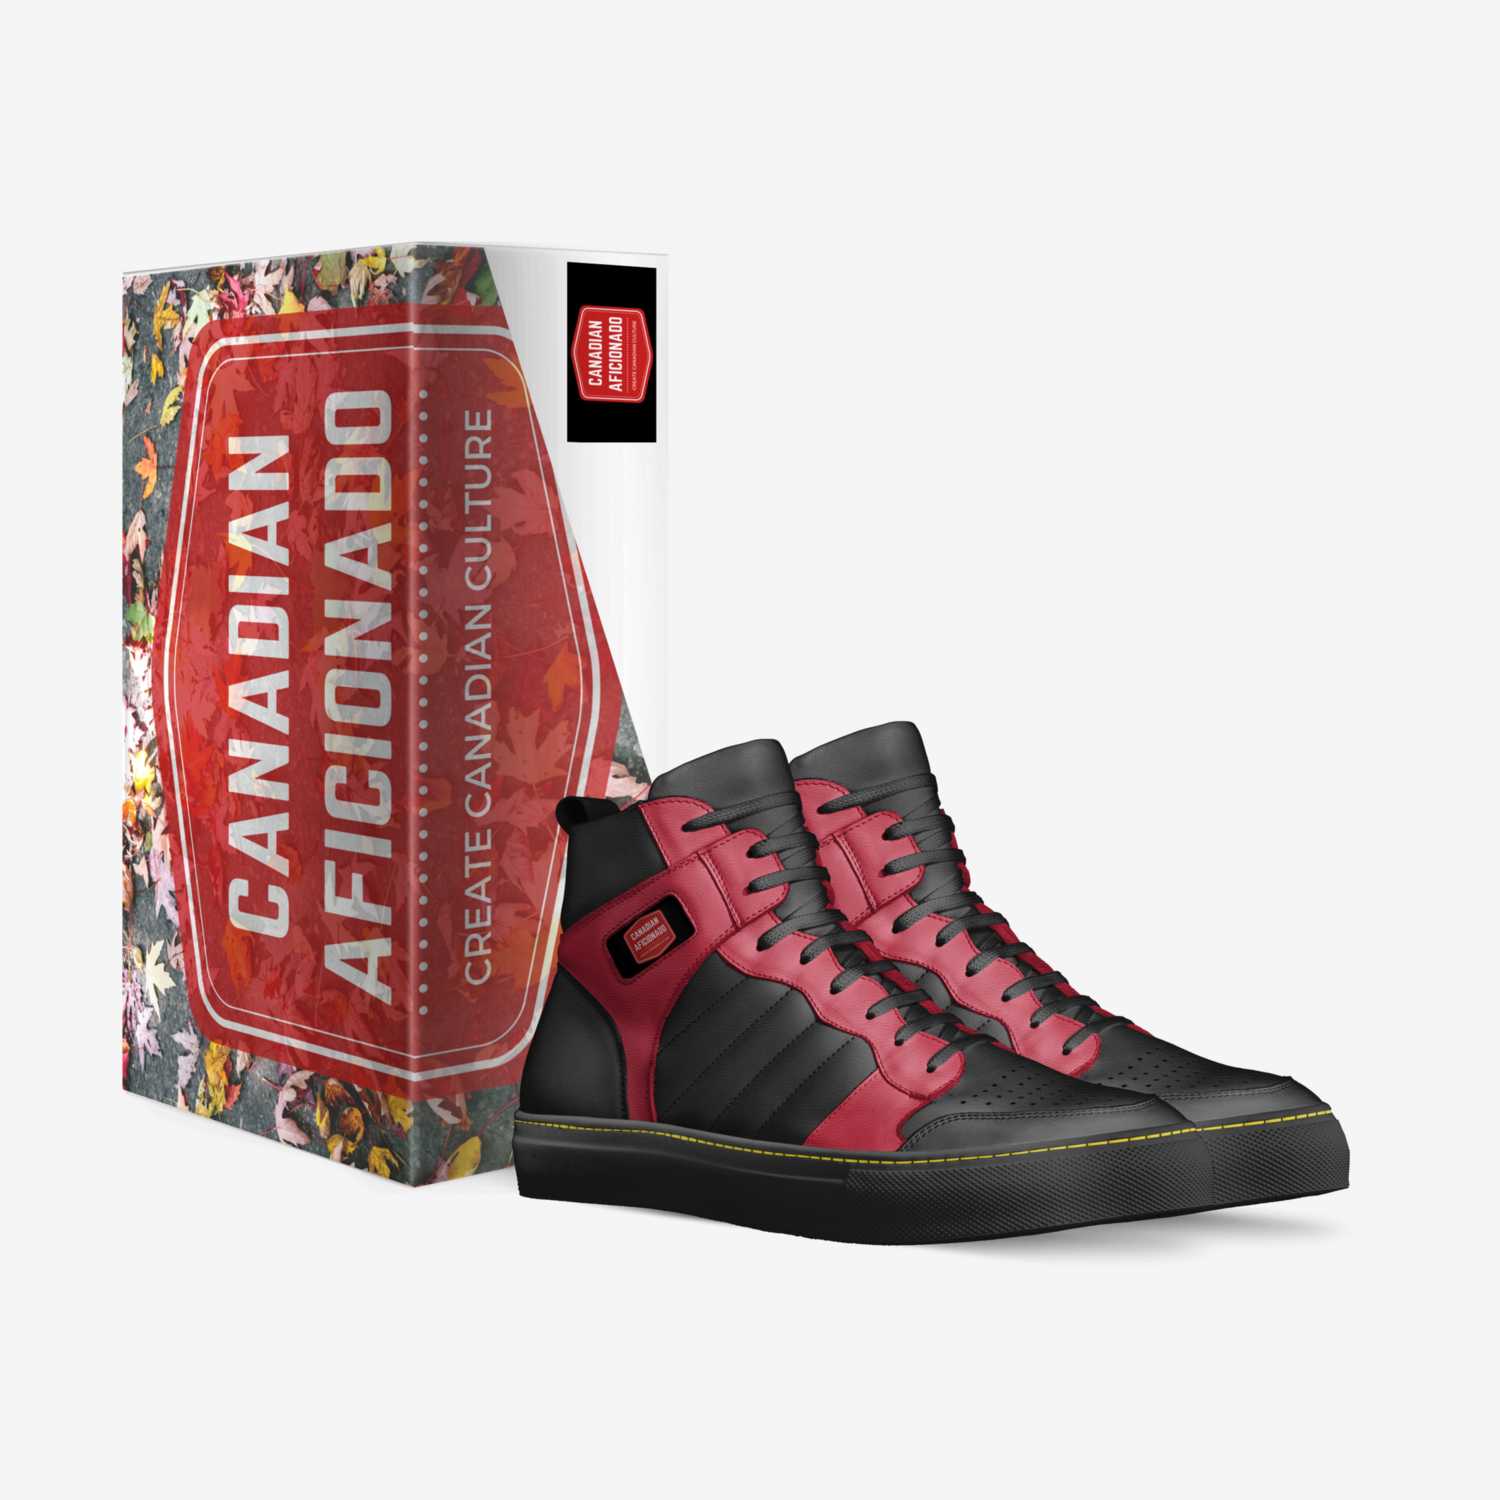 Aficionado custom made in Italy shoes by Jarett Lopez | Box view